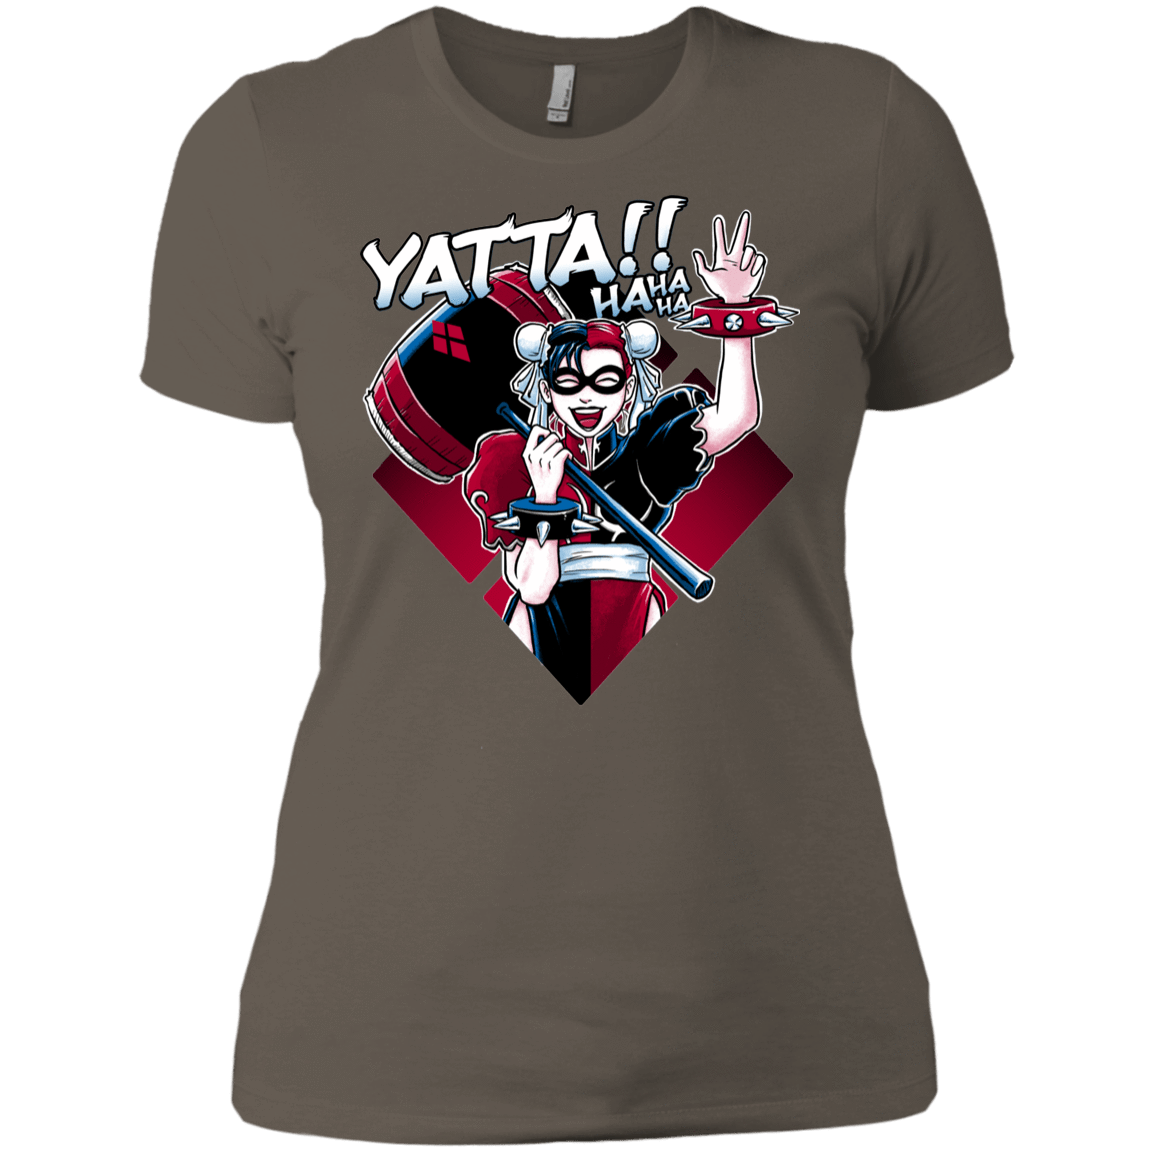 T-Shirts Warm Grey / X-Small Harley Yatta Women's Premium T-Shirt